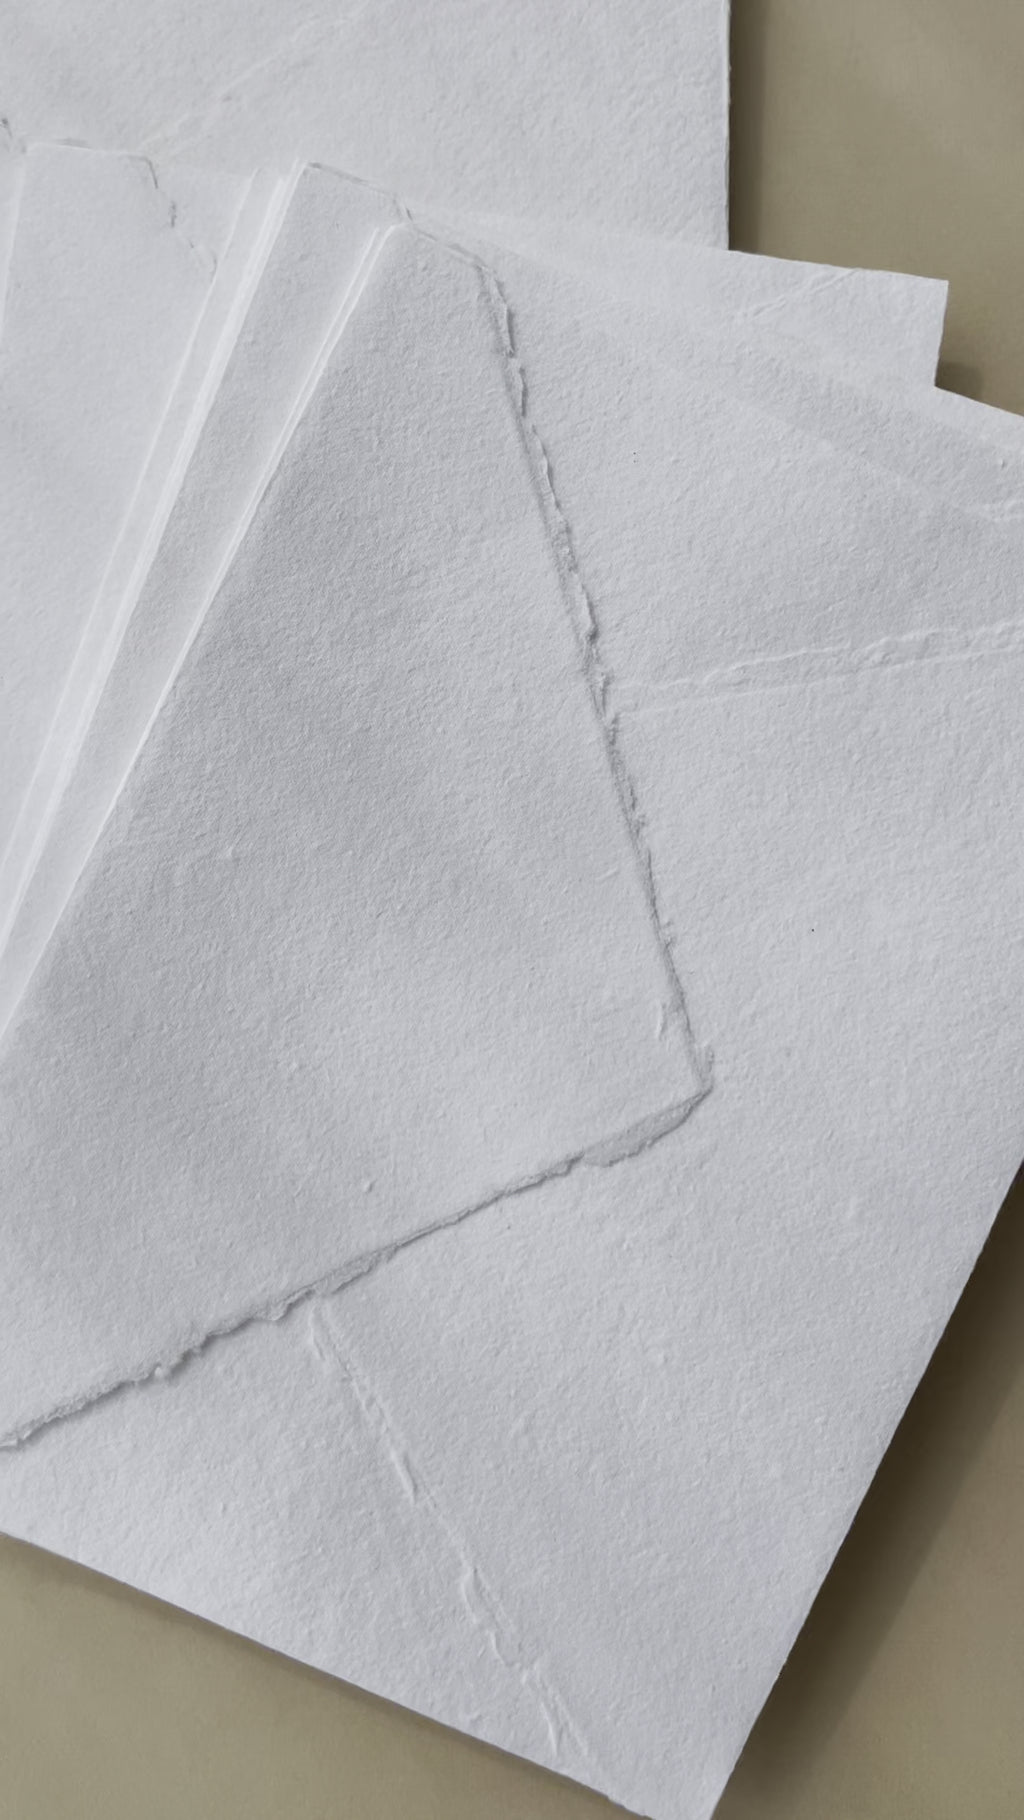 White cotton rag envelopes with a deckle edge finish.